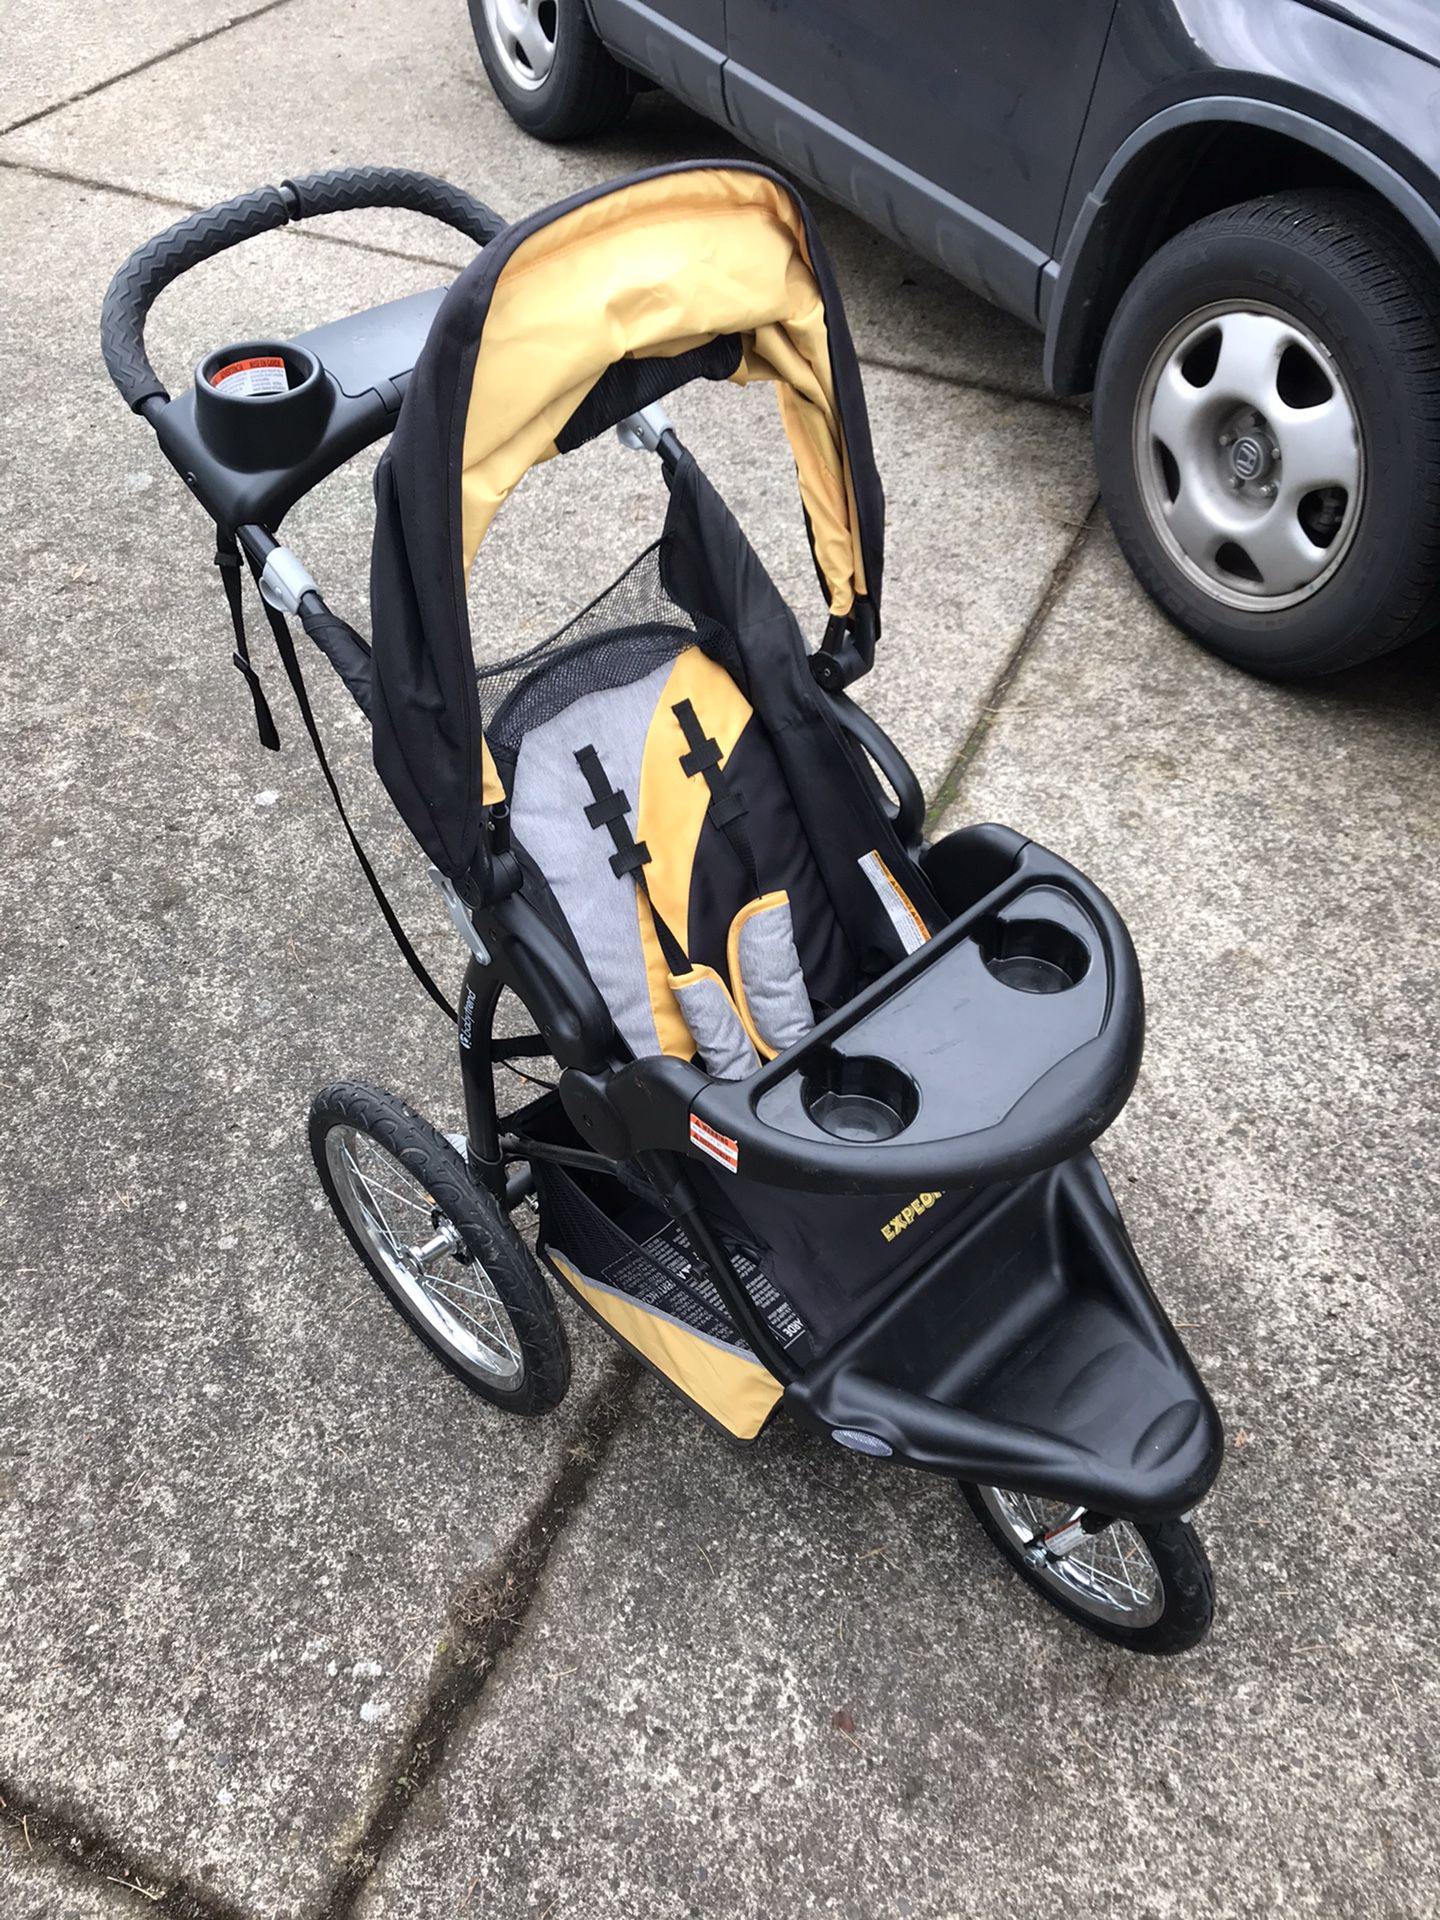 Babytrend Expedition Stroller